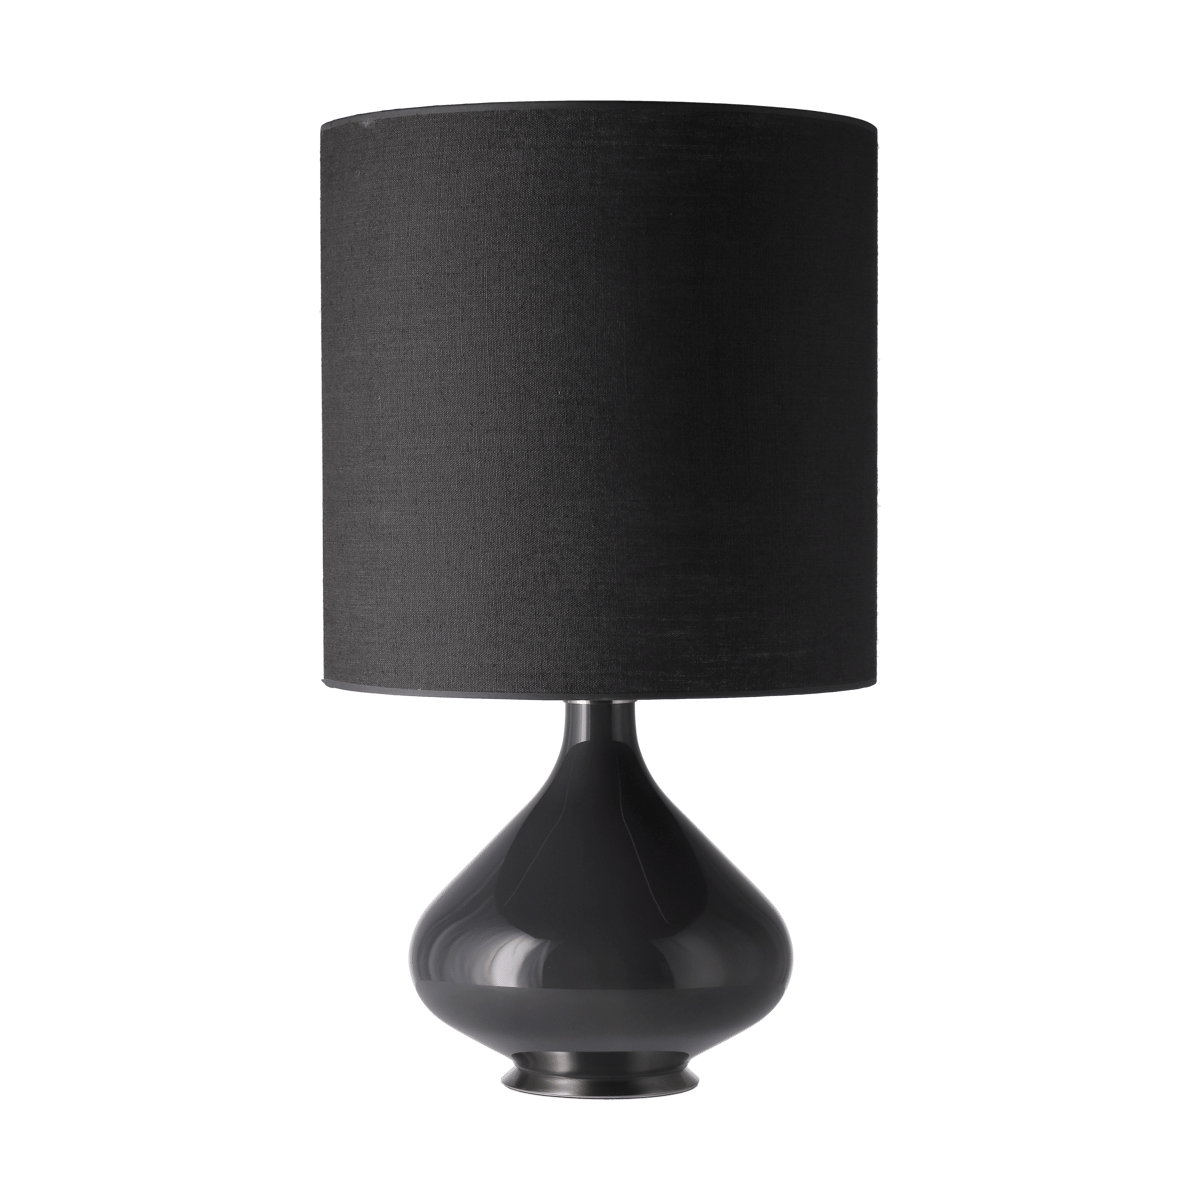 Flavia Lamps Flavia tafellamp grijze lampvoet Lino Negro M